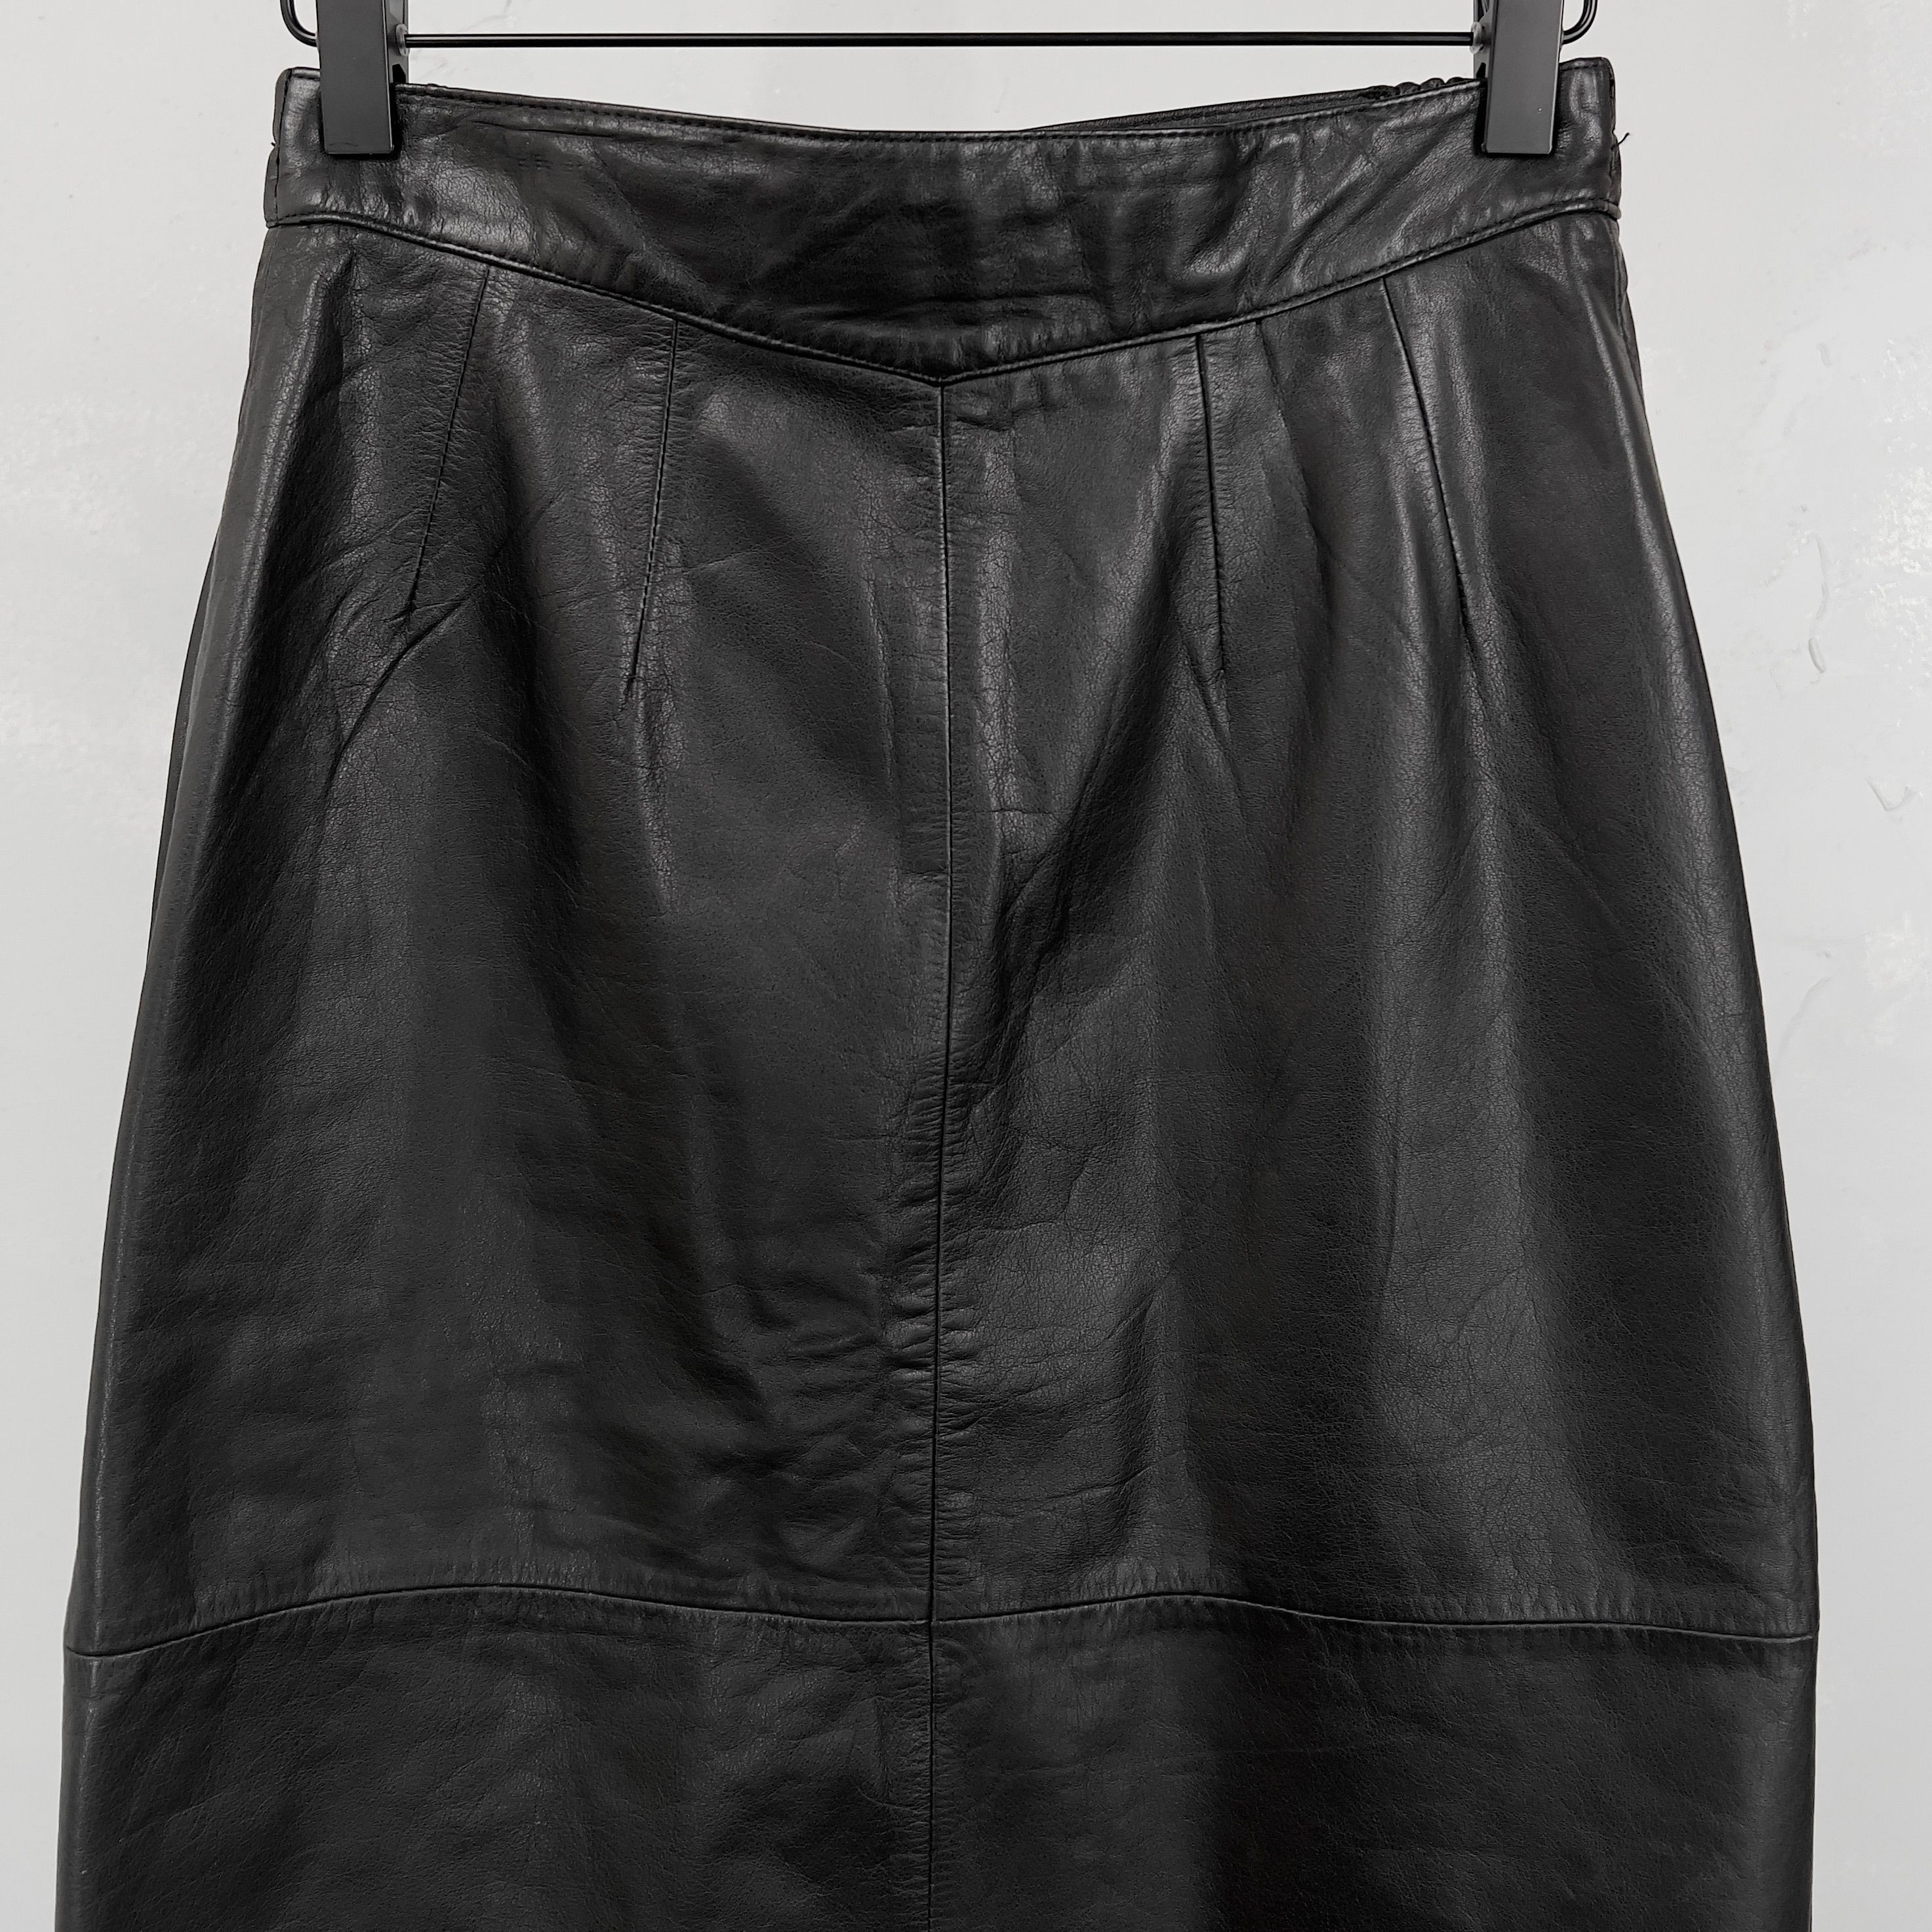 Vintage Vintage 1980s Switzer's Black Genuine Leather Skirt Size 26" / US 2 / IT 38 - 2 Preview